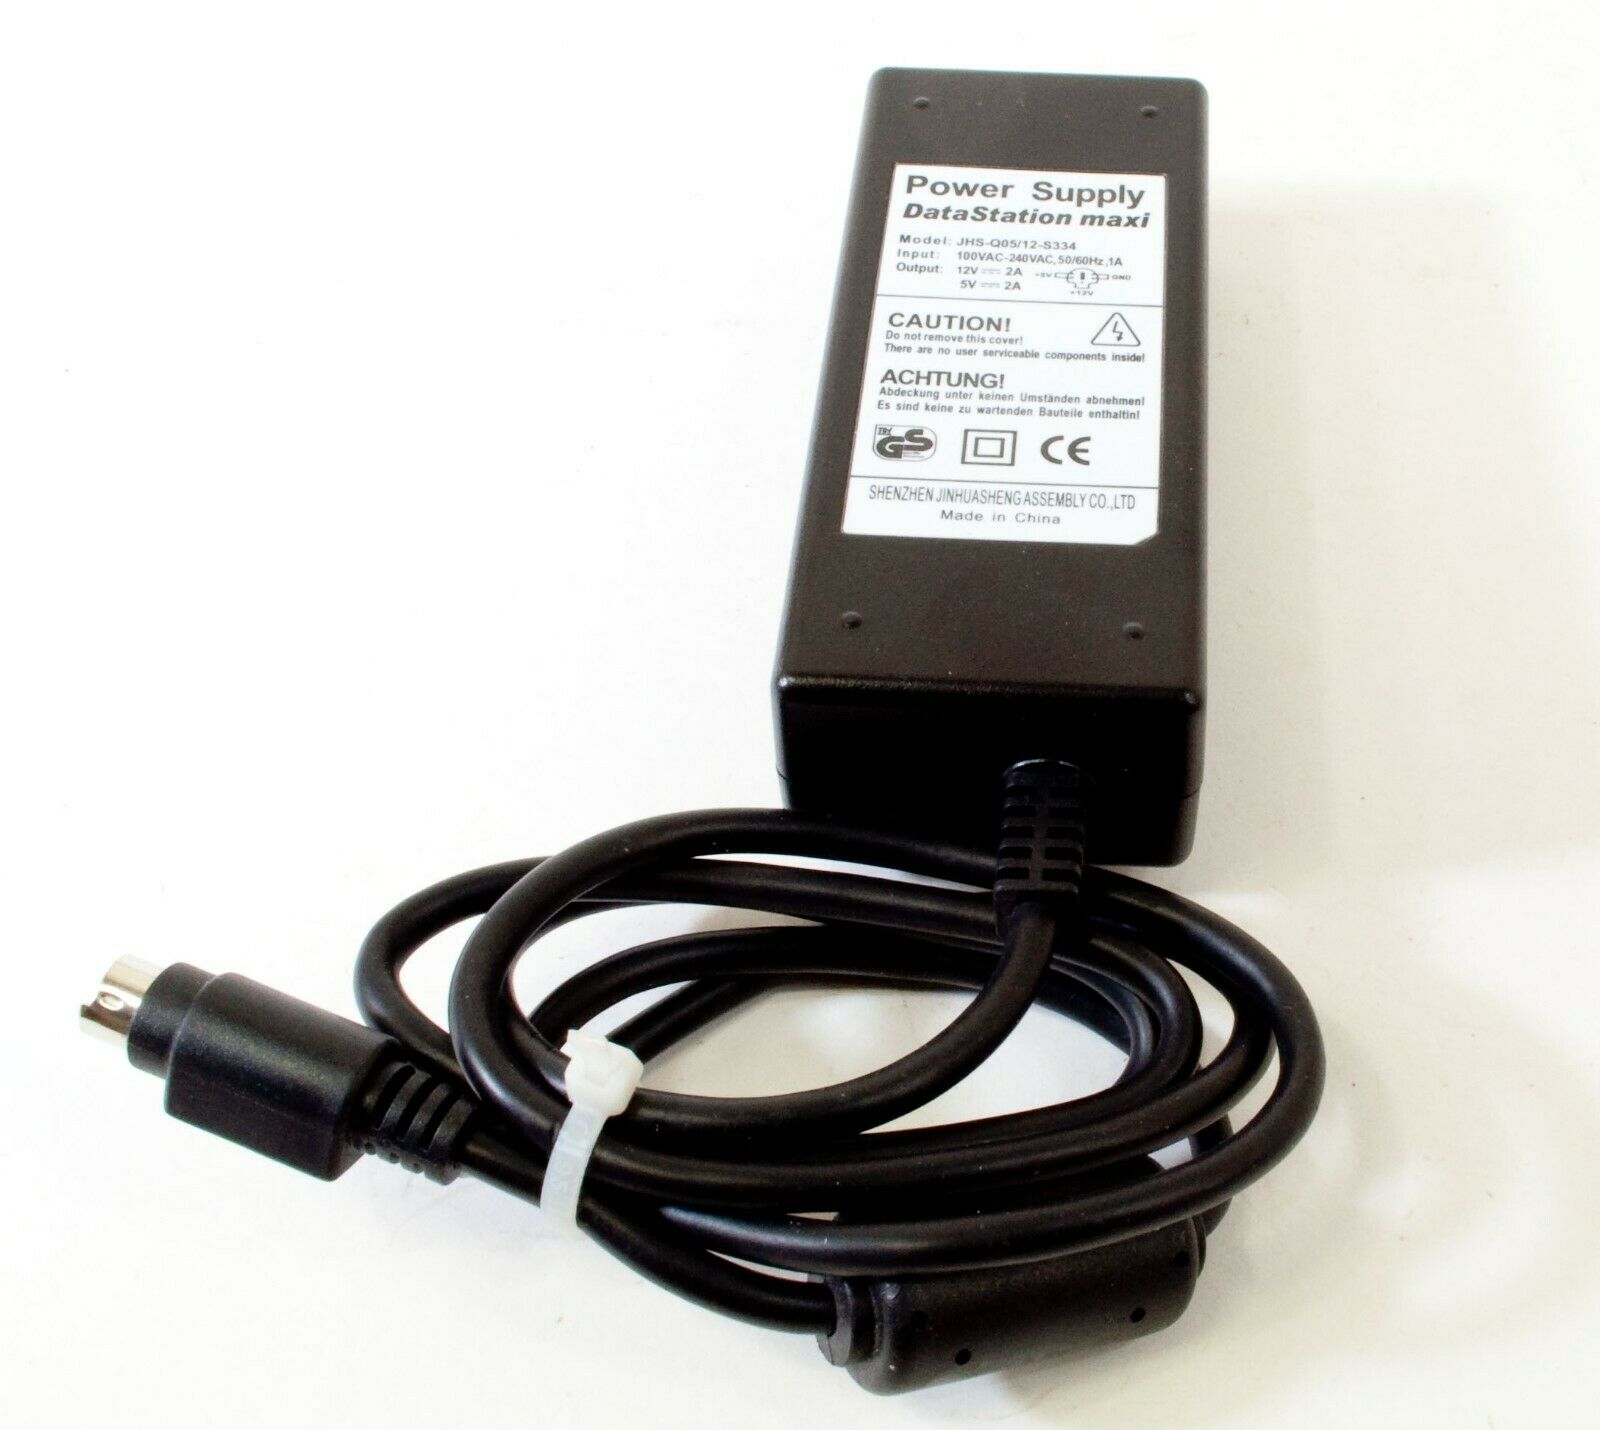 DataStation Maxi JHS-Q05-12-S334 AC Adapter 12V 2A Original Power Supply Unit Type: Unit Output Voltage: 12 V MPN: J